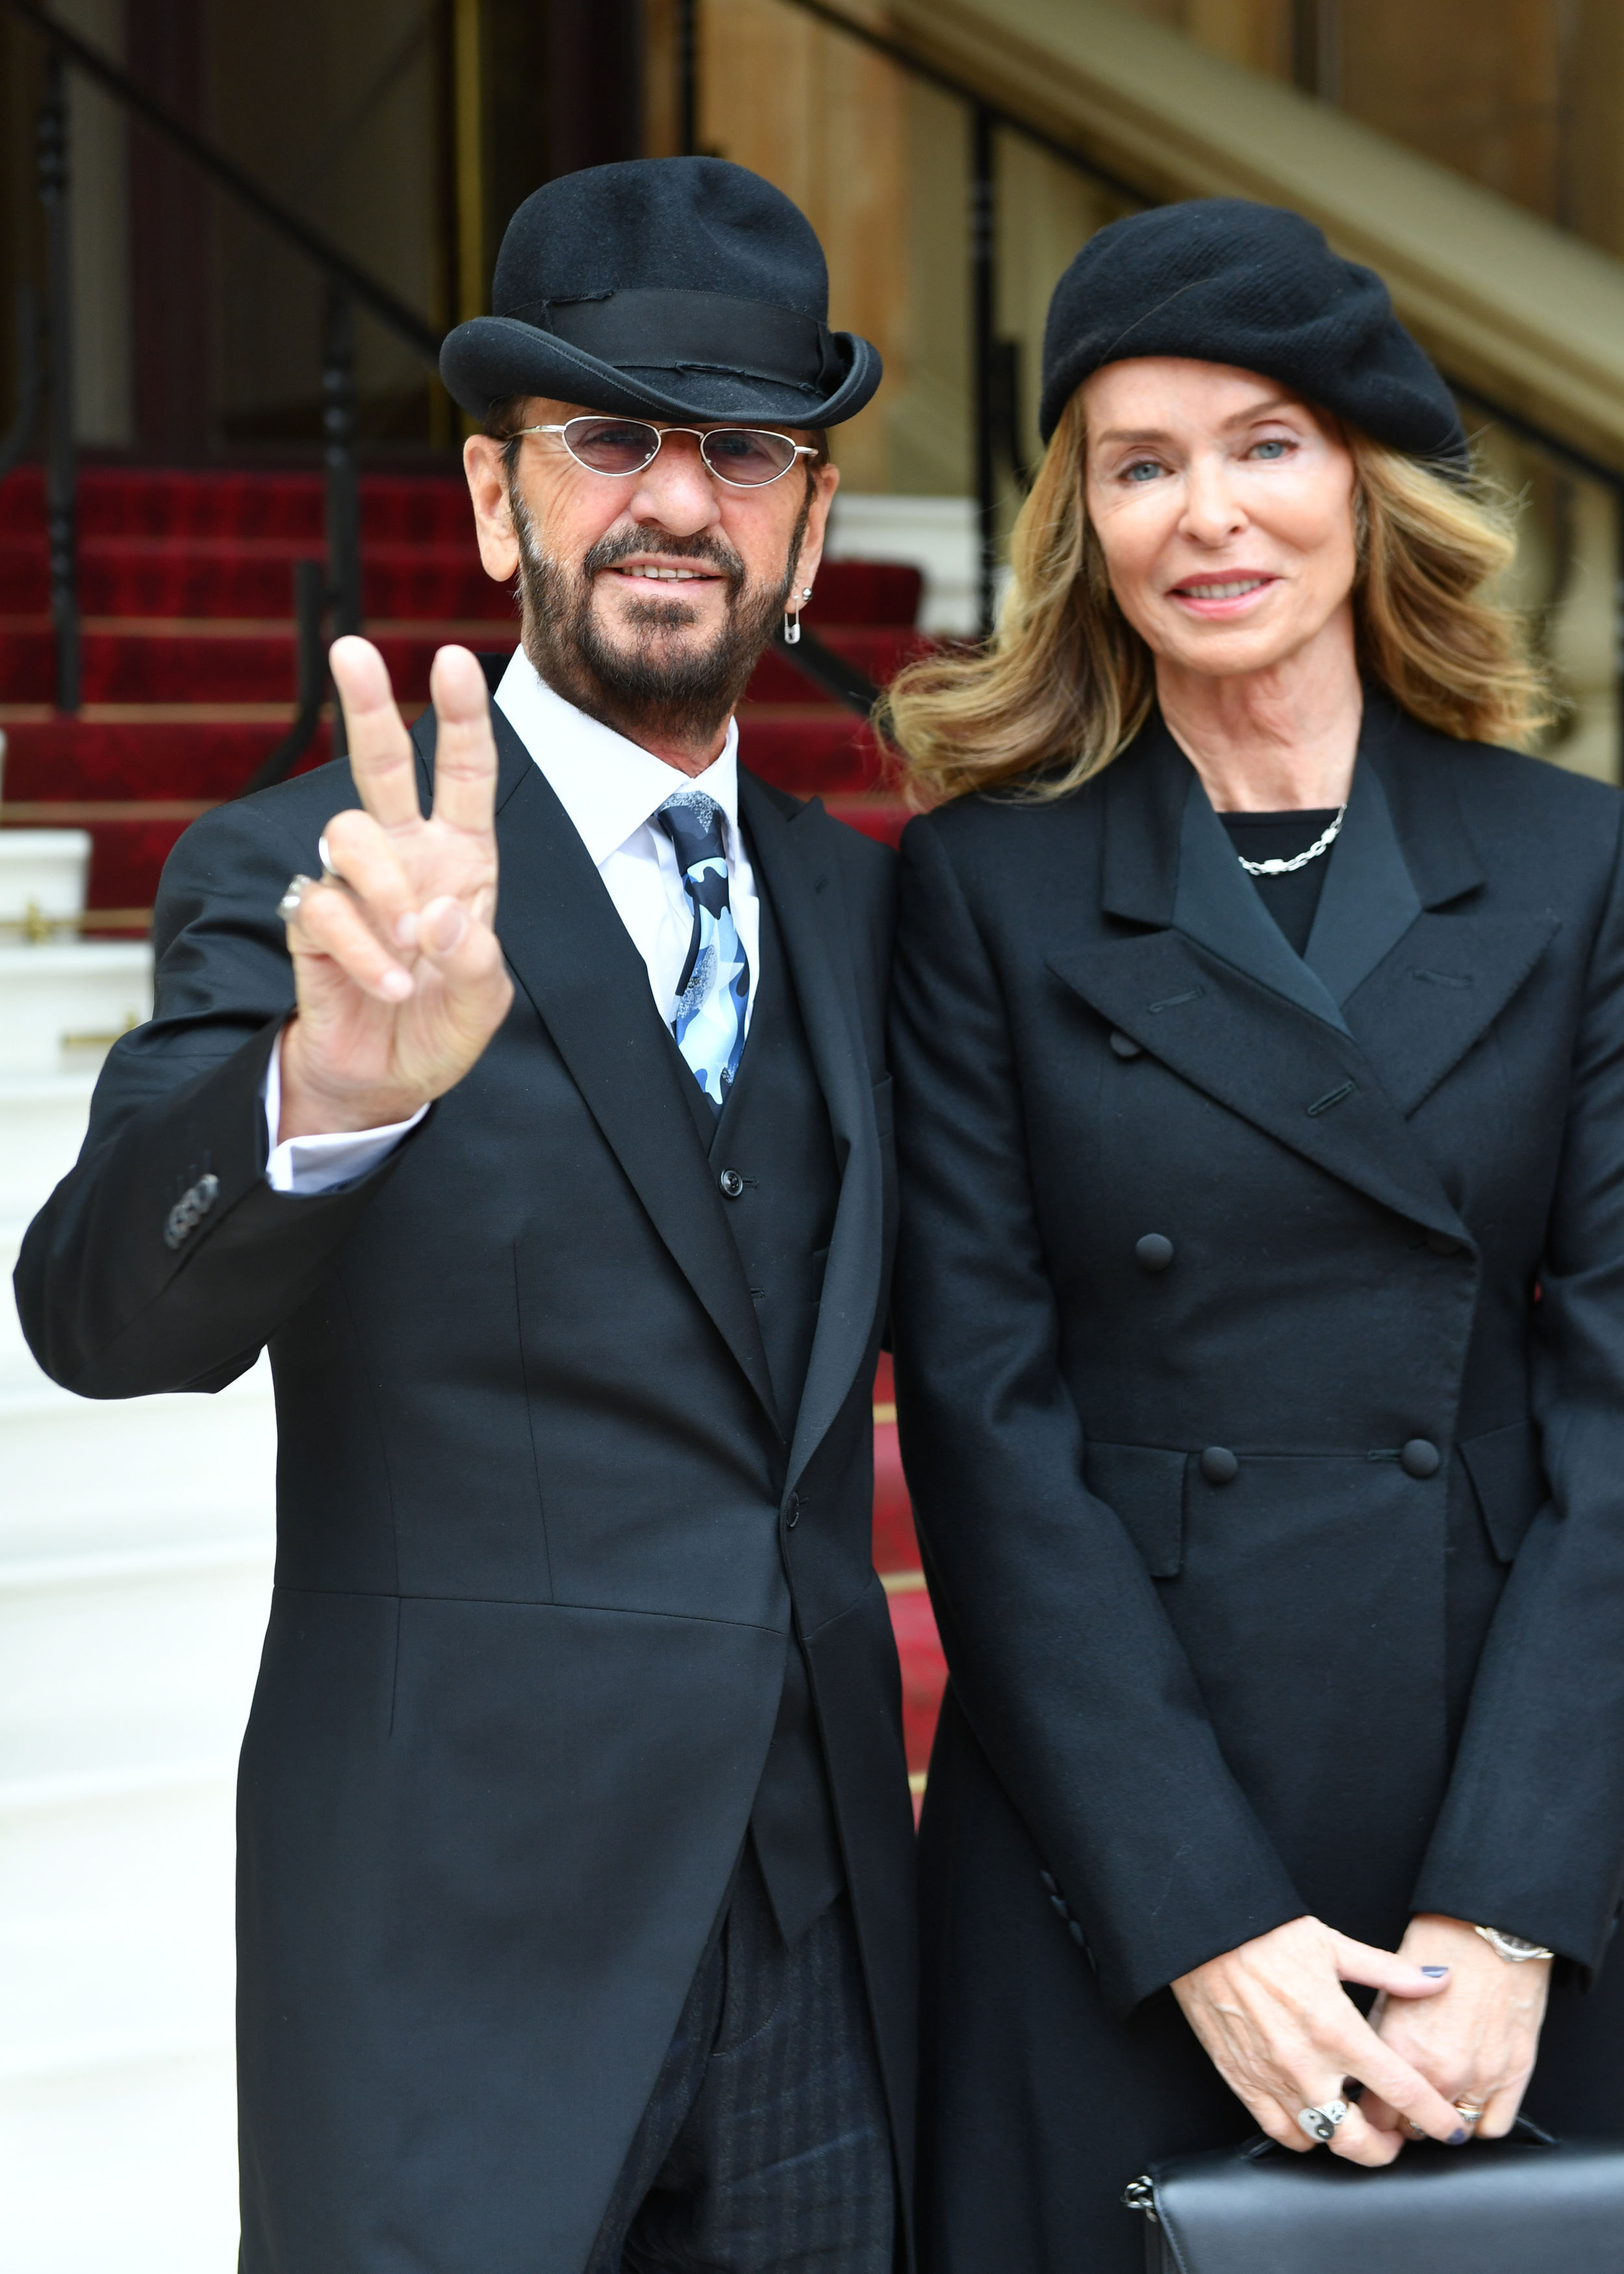 Ringo Starr knighted